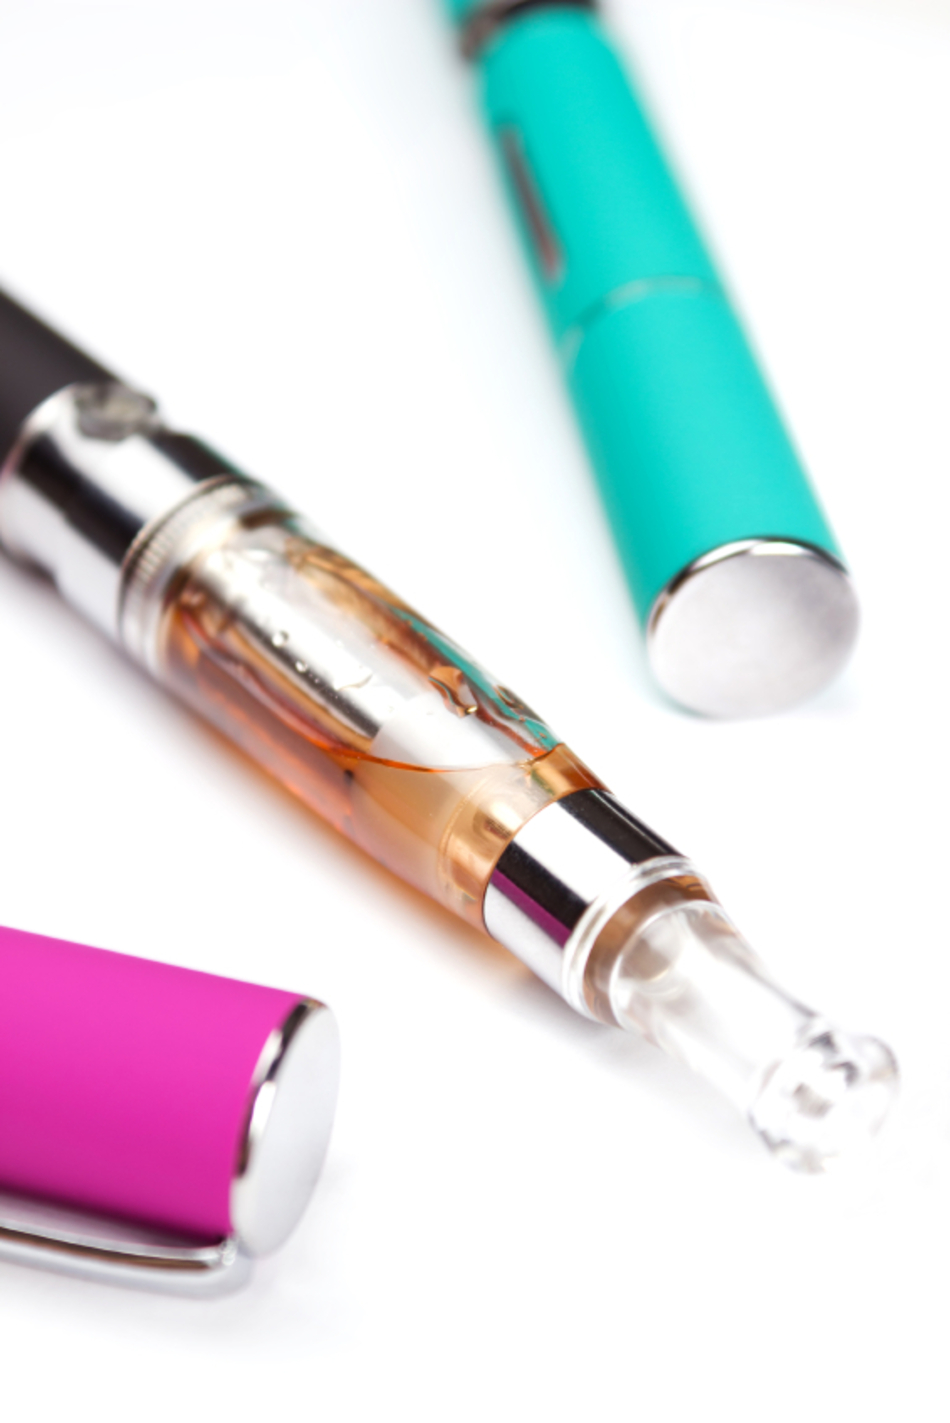 Poisonings Skyrocket as Kids Ingest E-cigarette Nicotine Refills